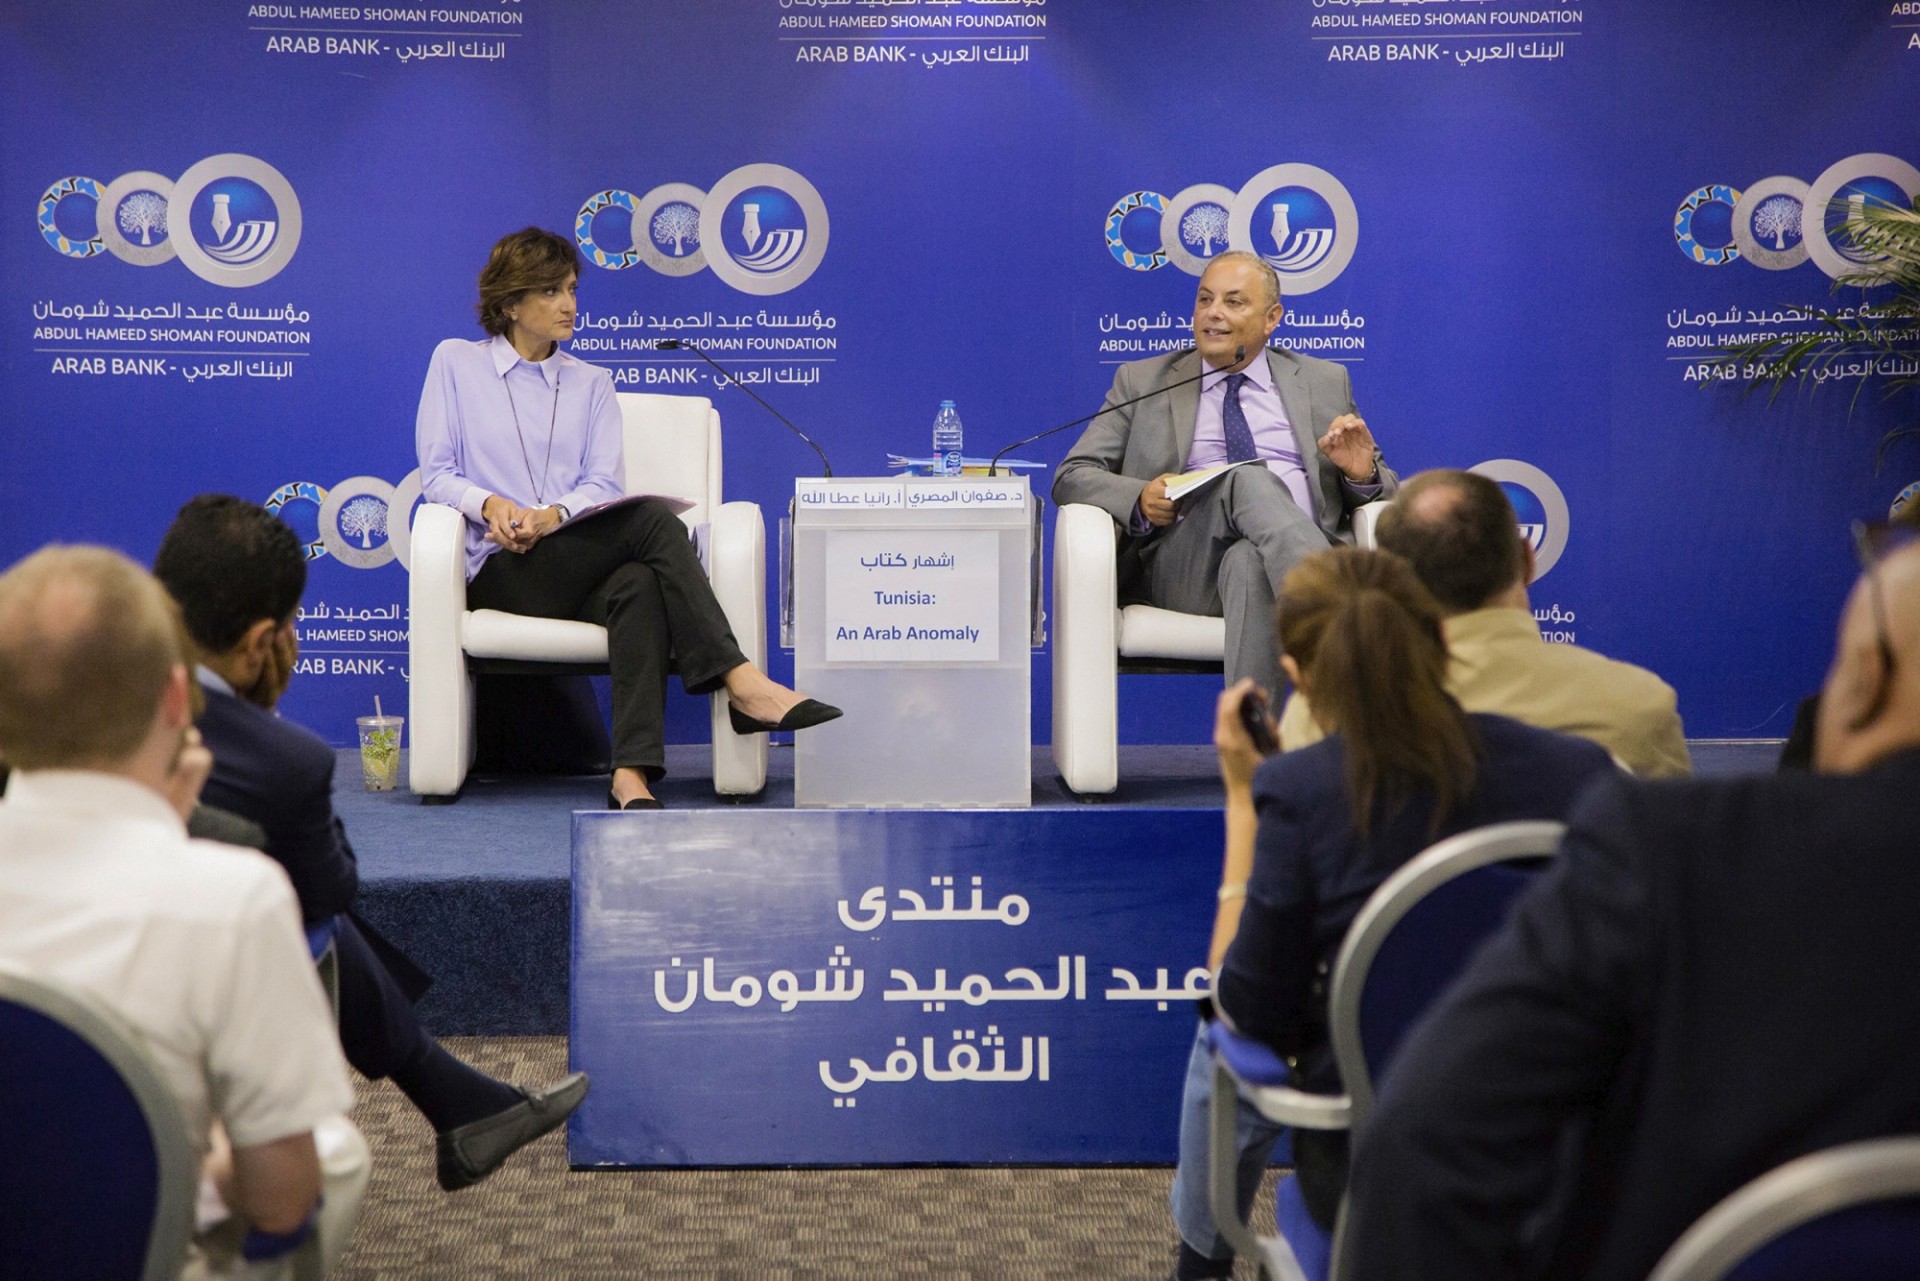 Abdul Hameed Shoman Foundation hosts Safwan Masri for book launch